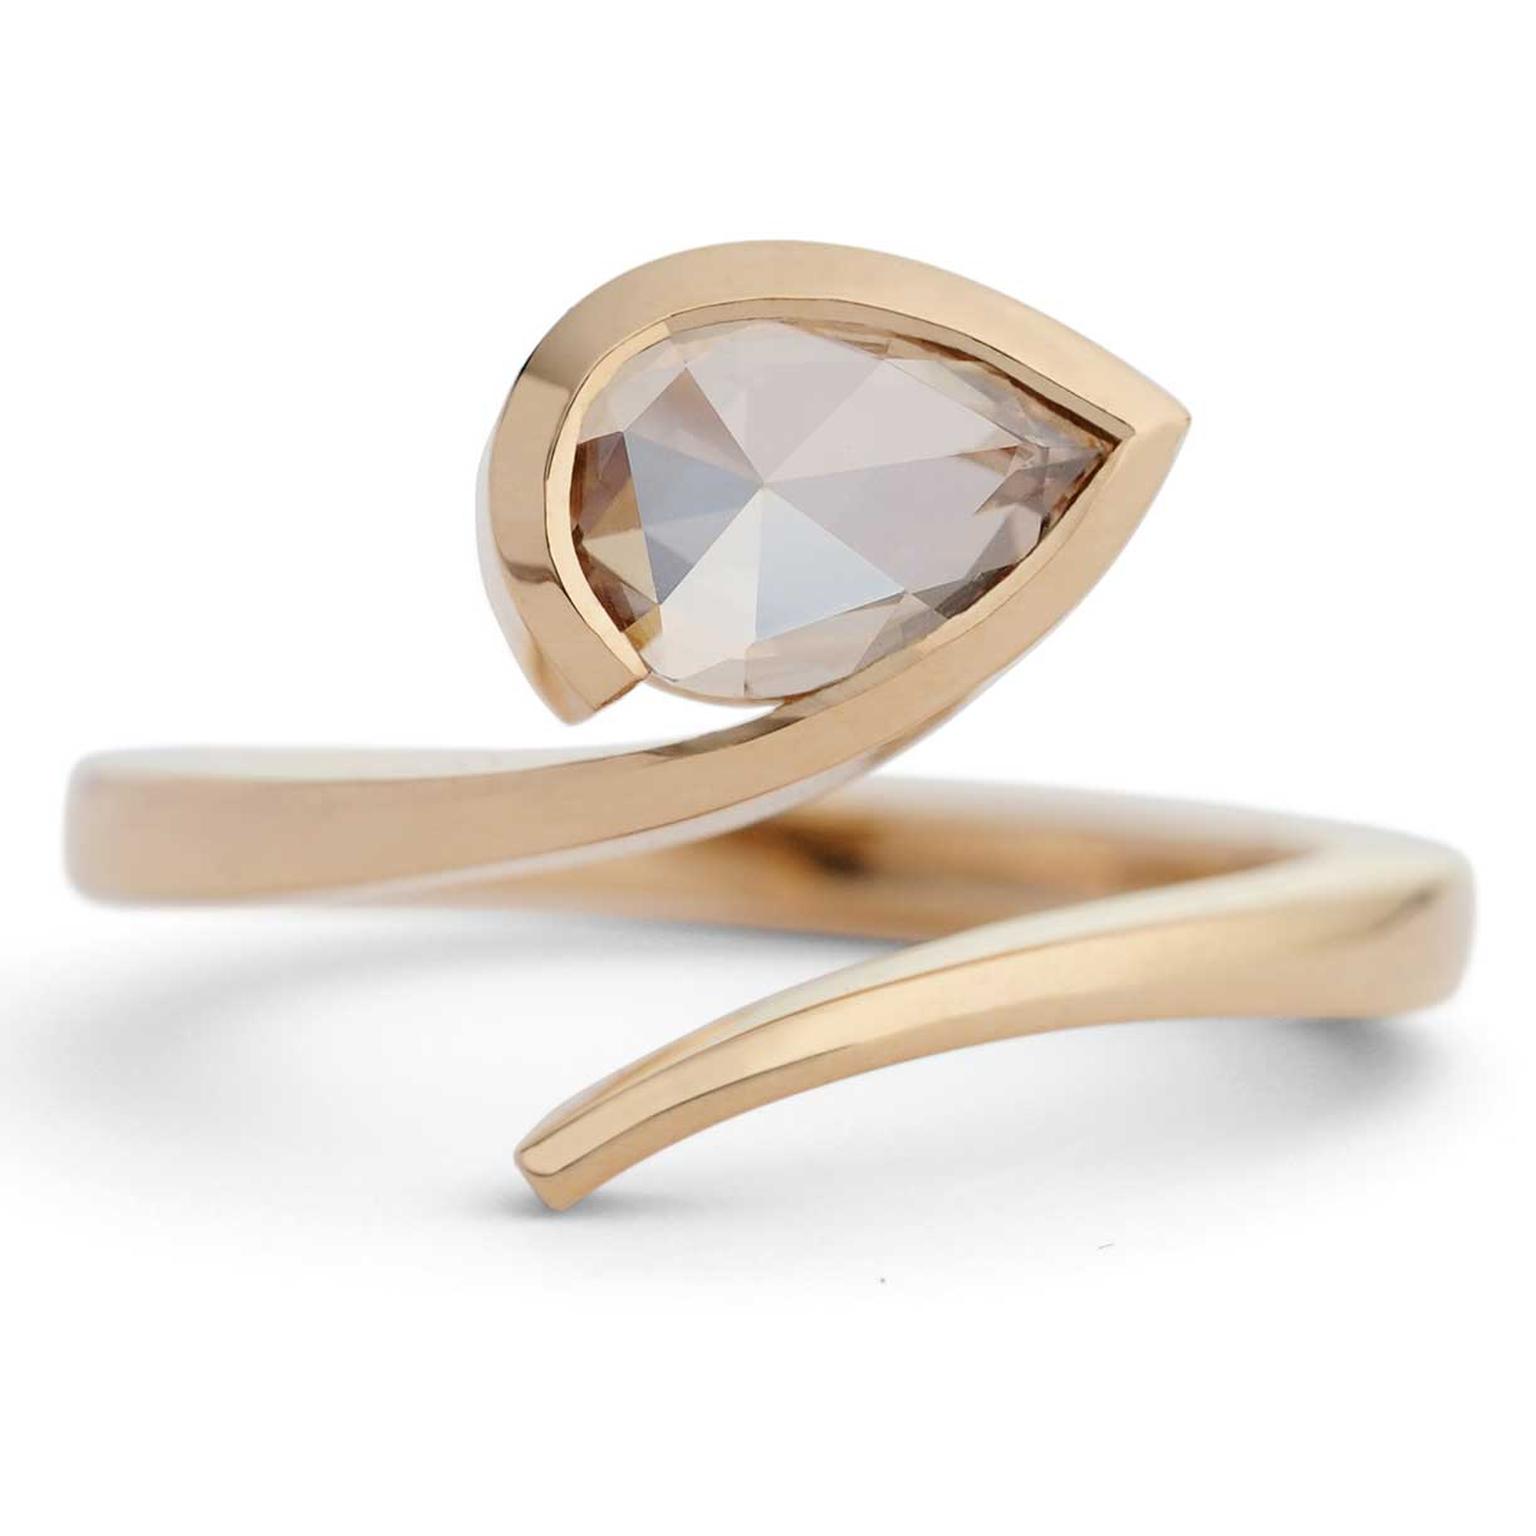 McCaul Goldsmiths pear-shaped cognac diamond engagement ring